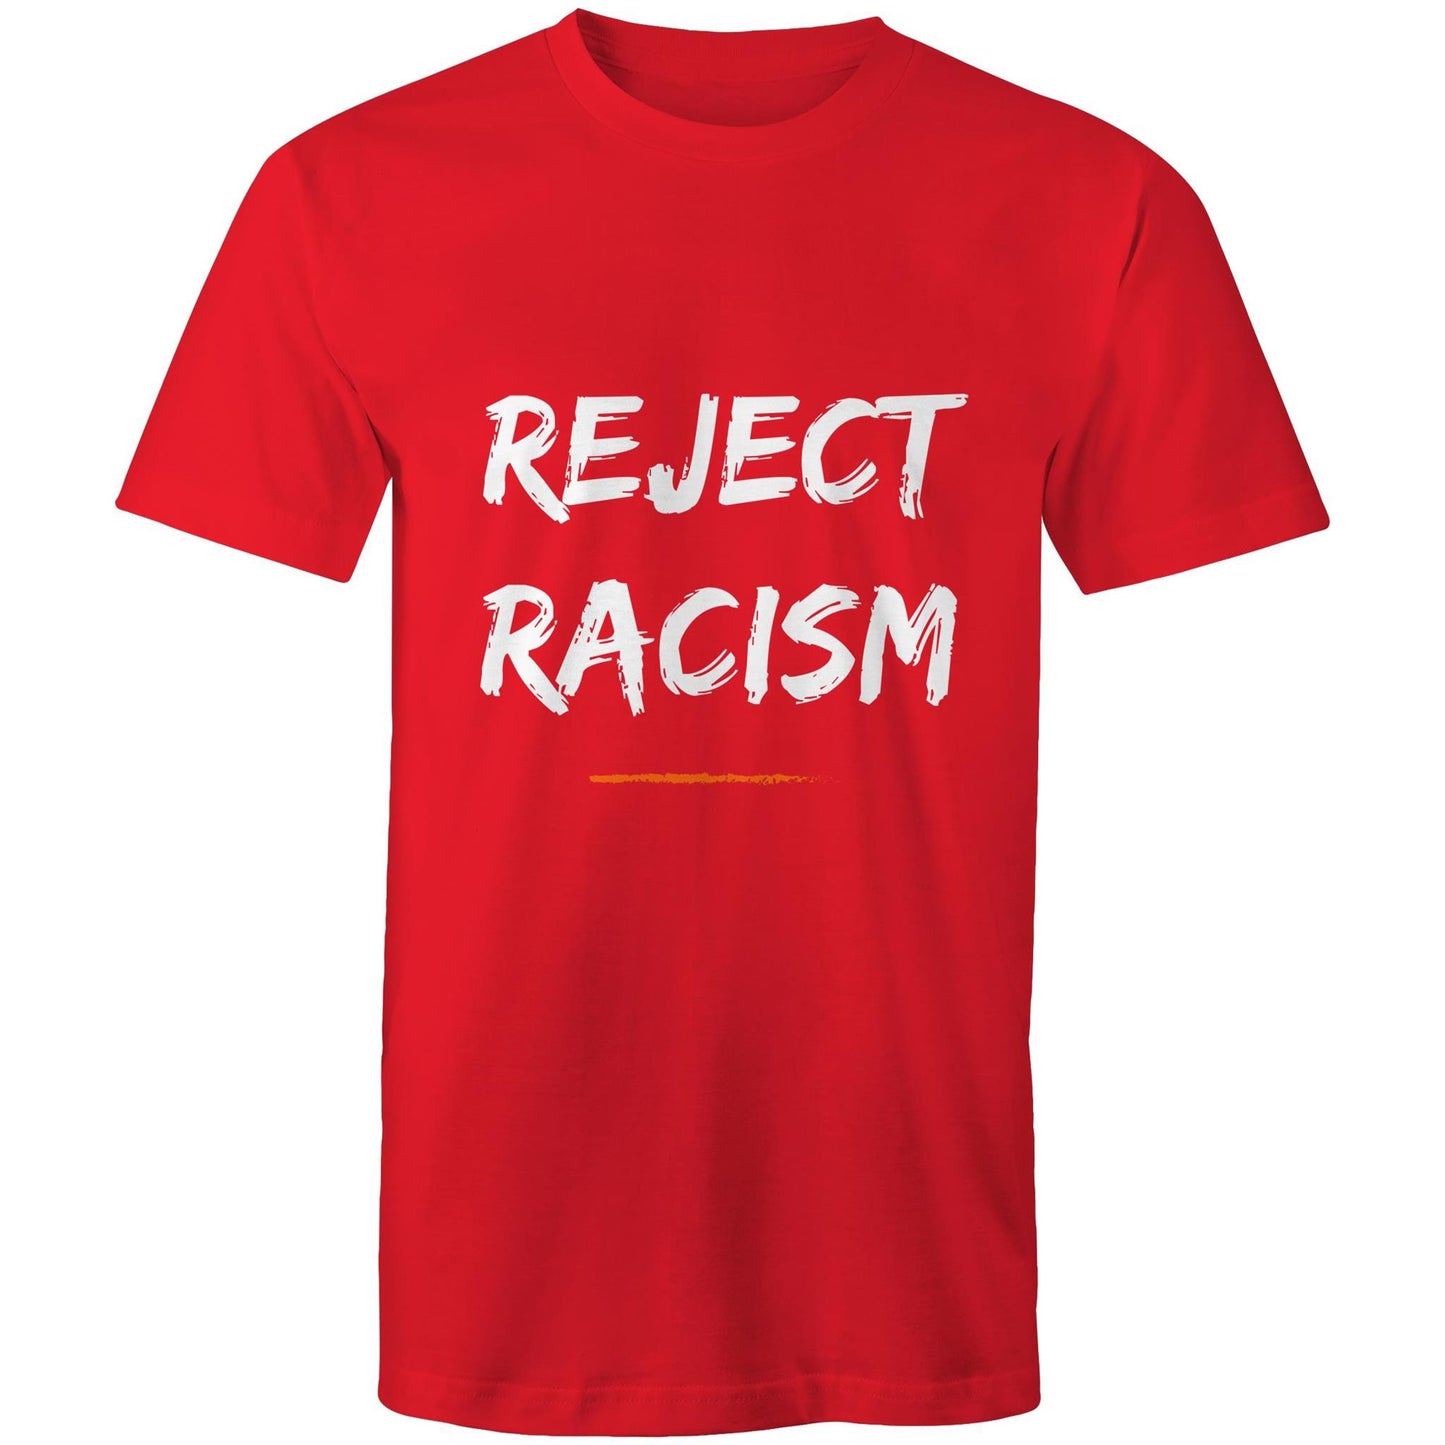 REJECT RACISM - Mens T-Shirt